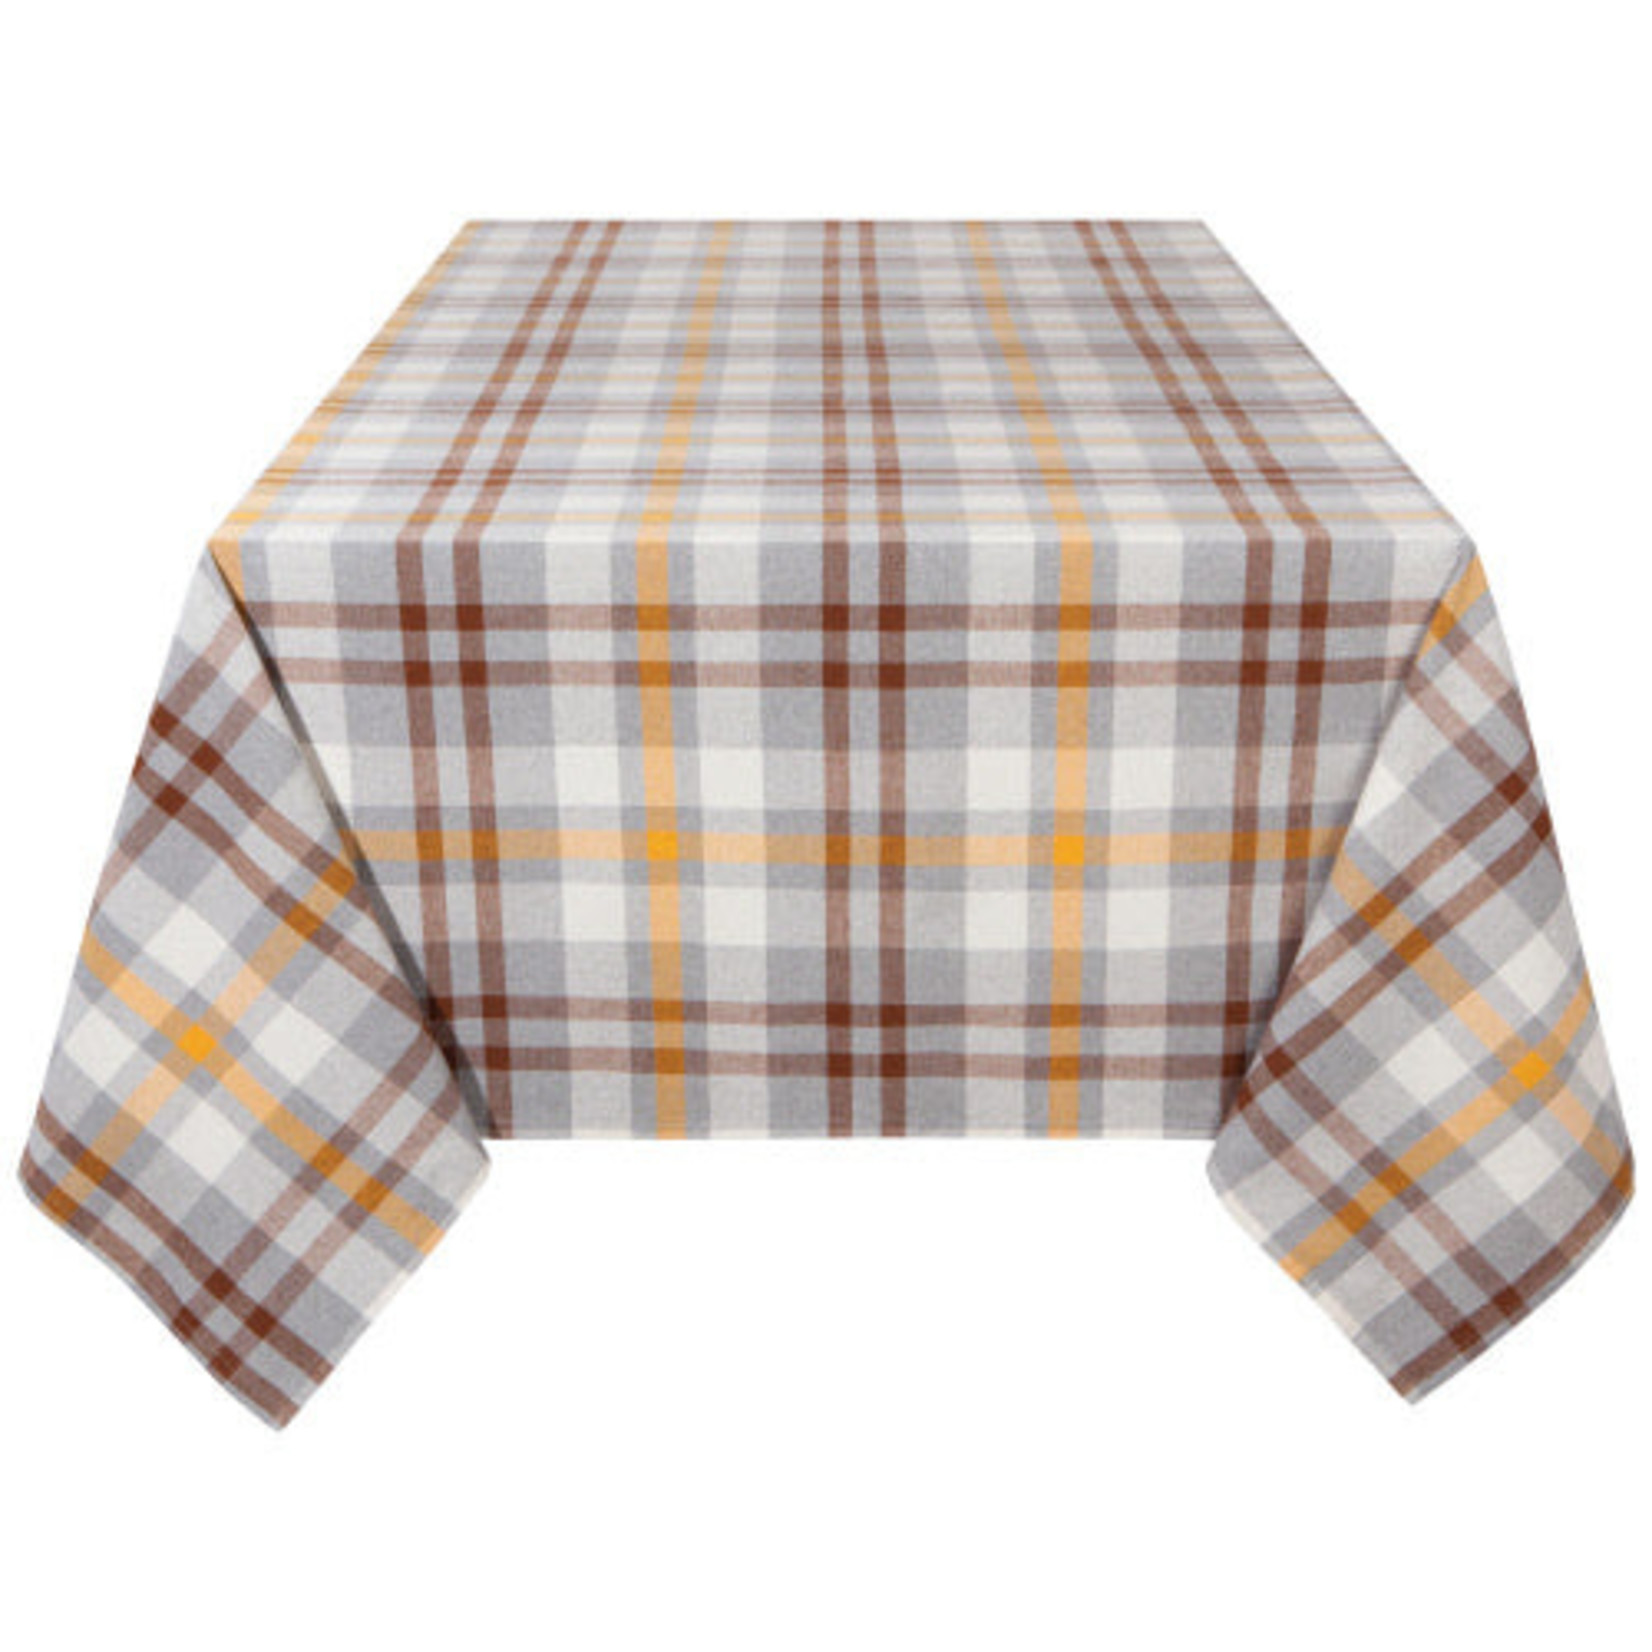 Maize Plaid Table Cloth - 60" x 120"